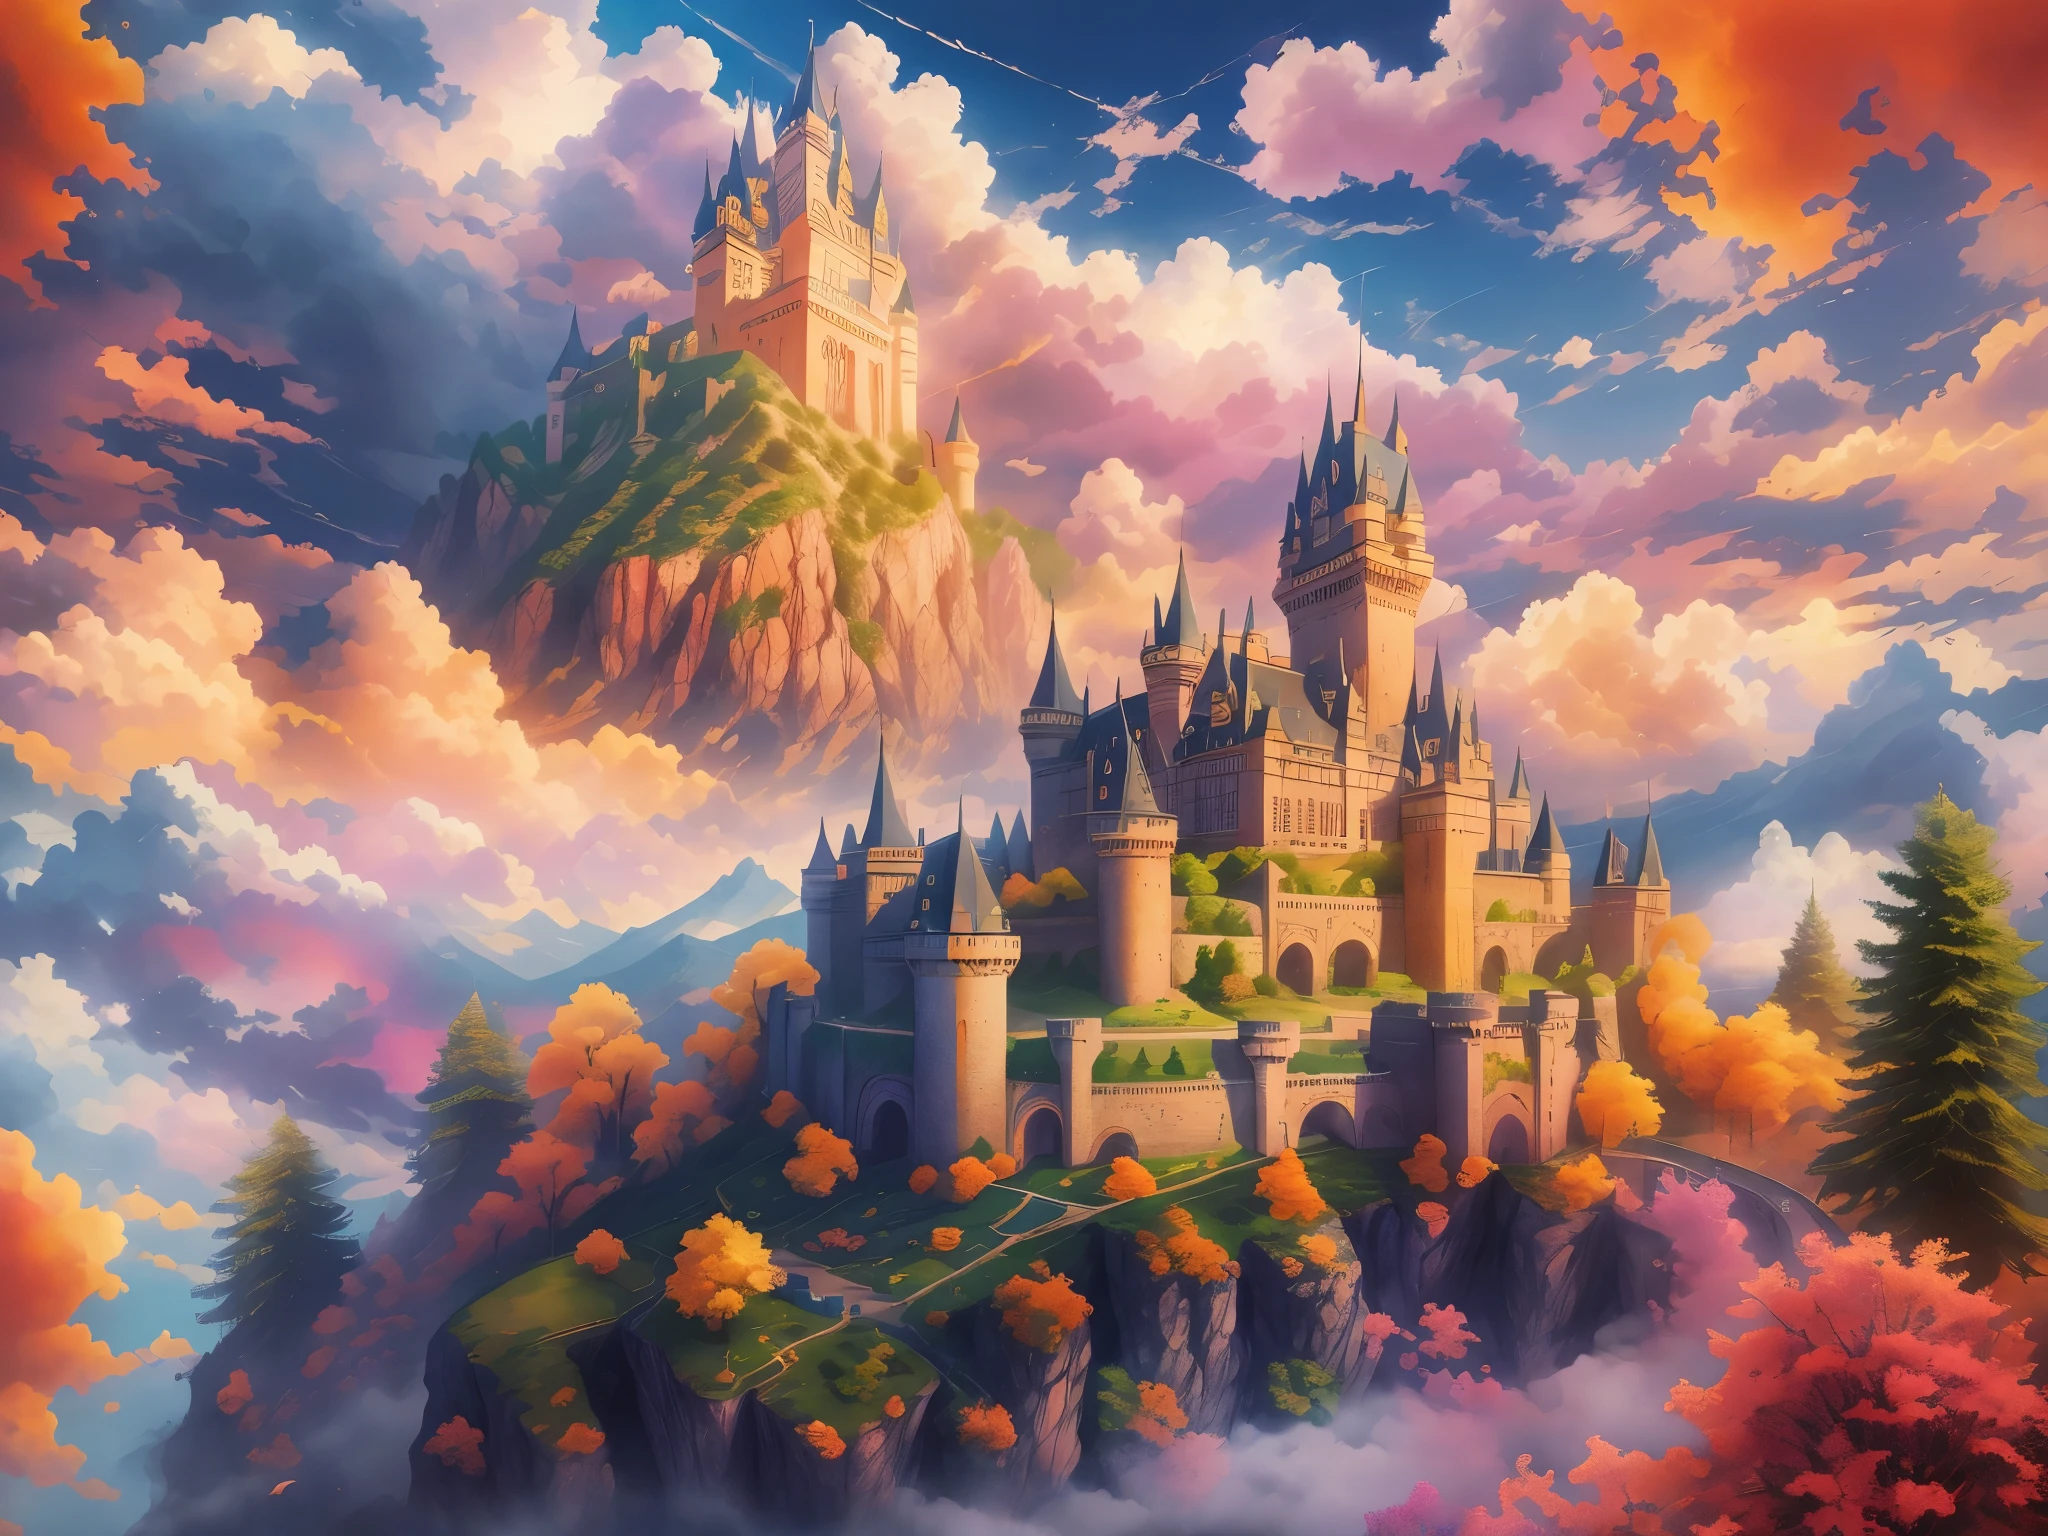 A castle surrounded by clouds, magnificent architecture, masterpiece, best quality, super details, realistic: 1.37, vivid colors, soft lighting